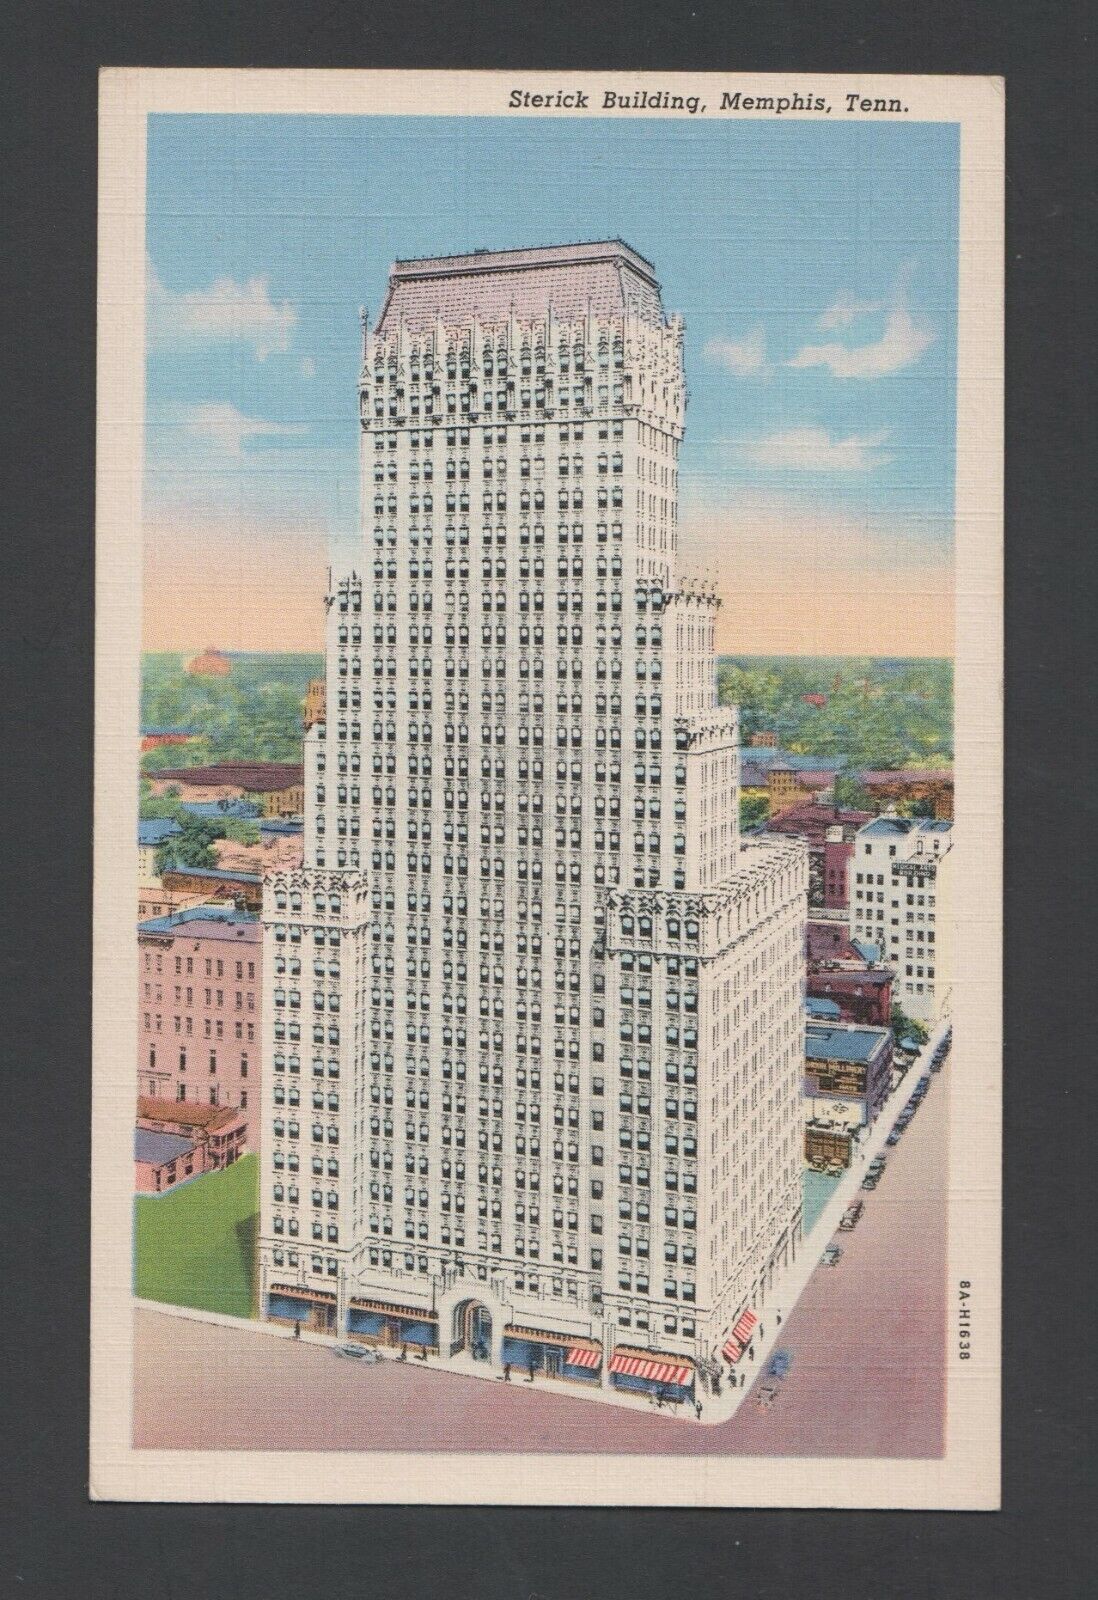 white border linen postcard - Sterick Building, Memphis, Tennessee - unposted